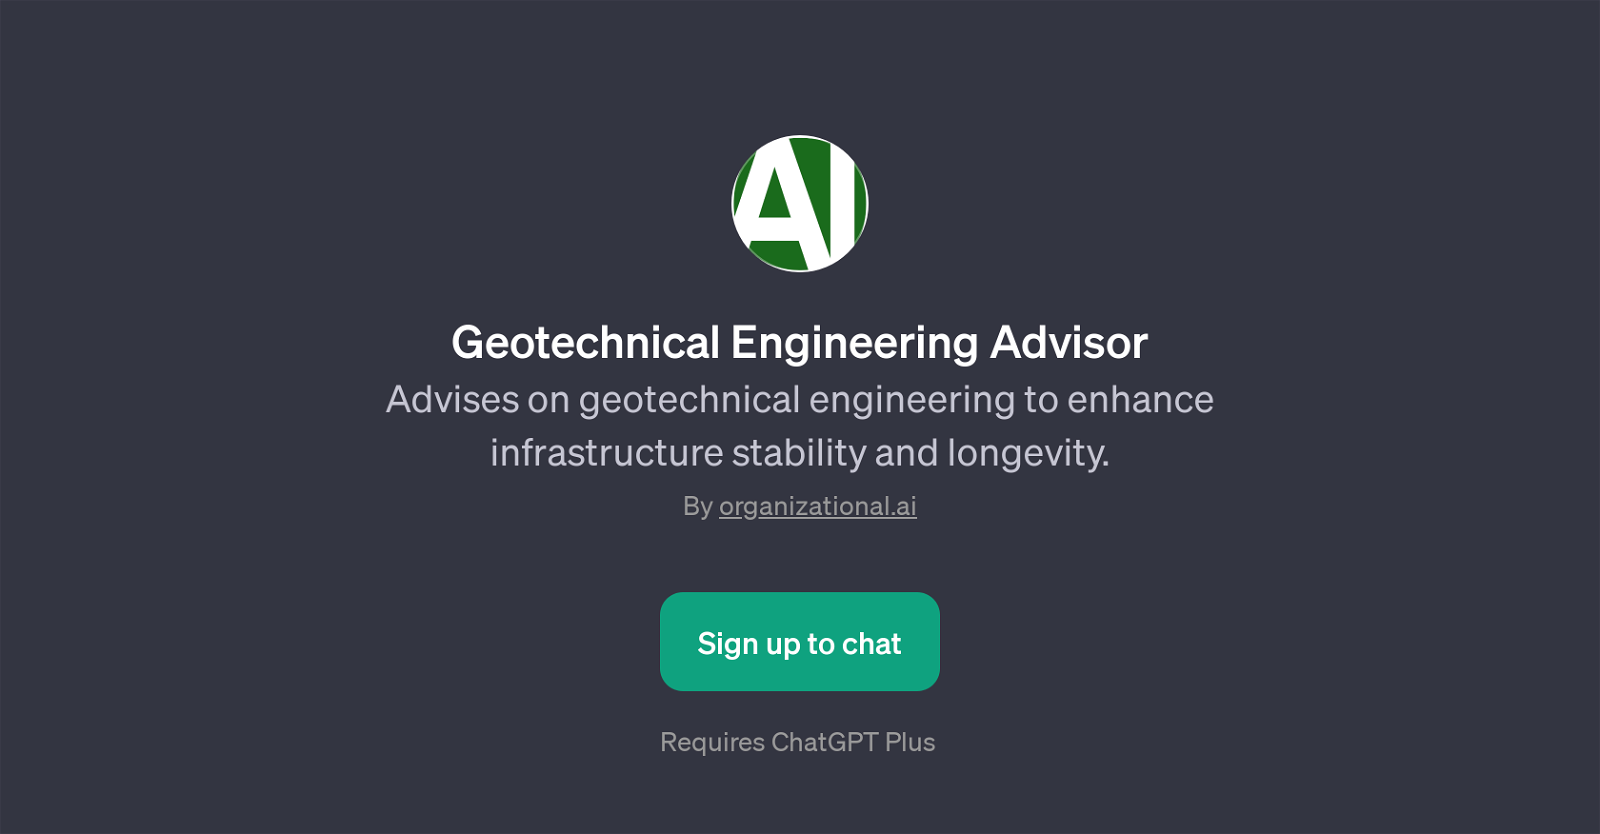 Geotechnical Engineering Advisor website